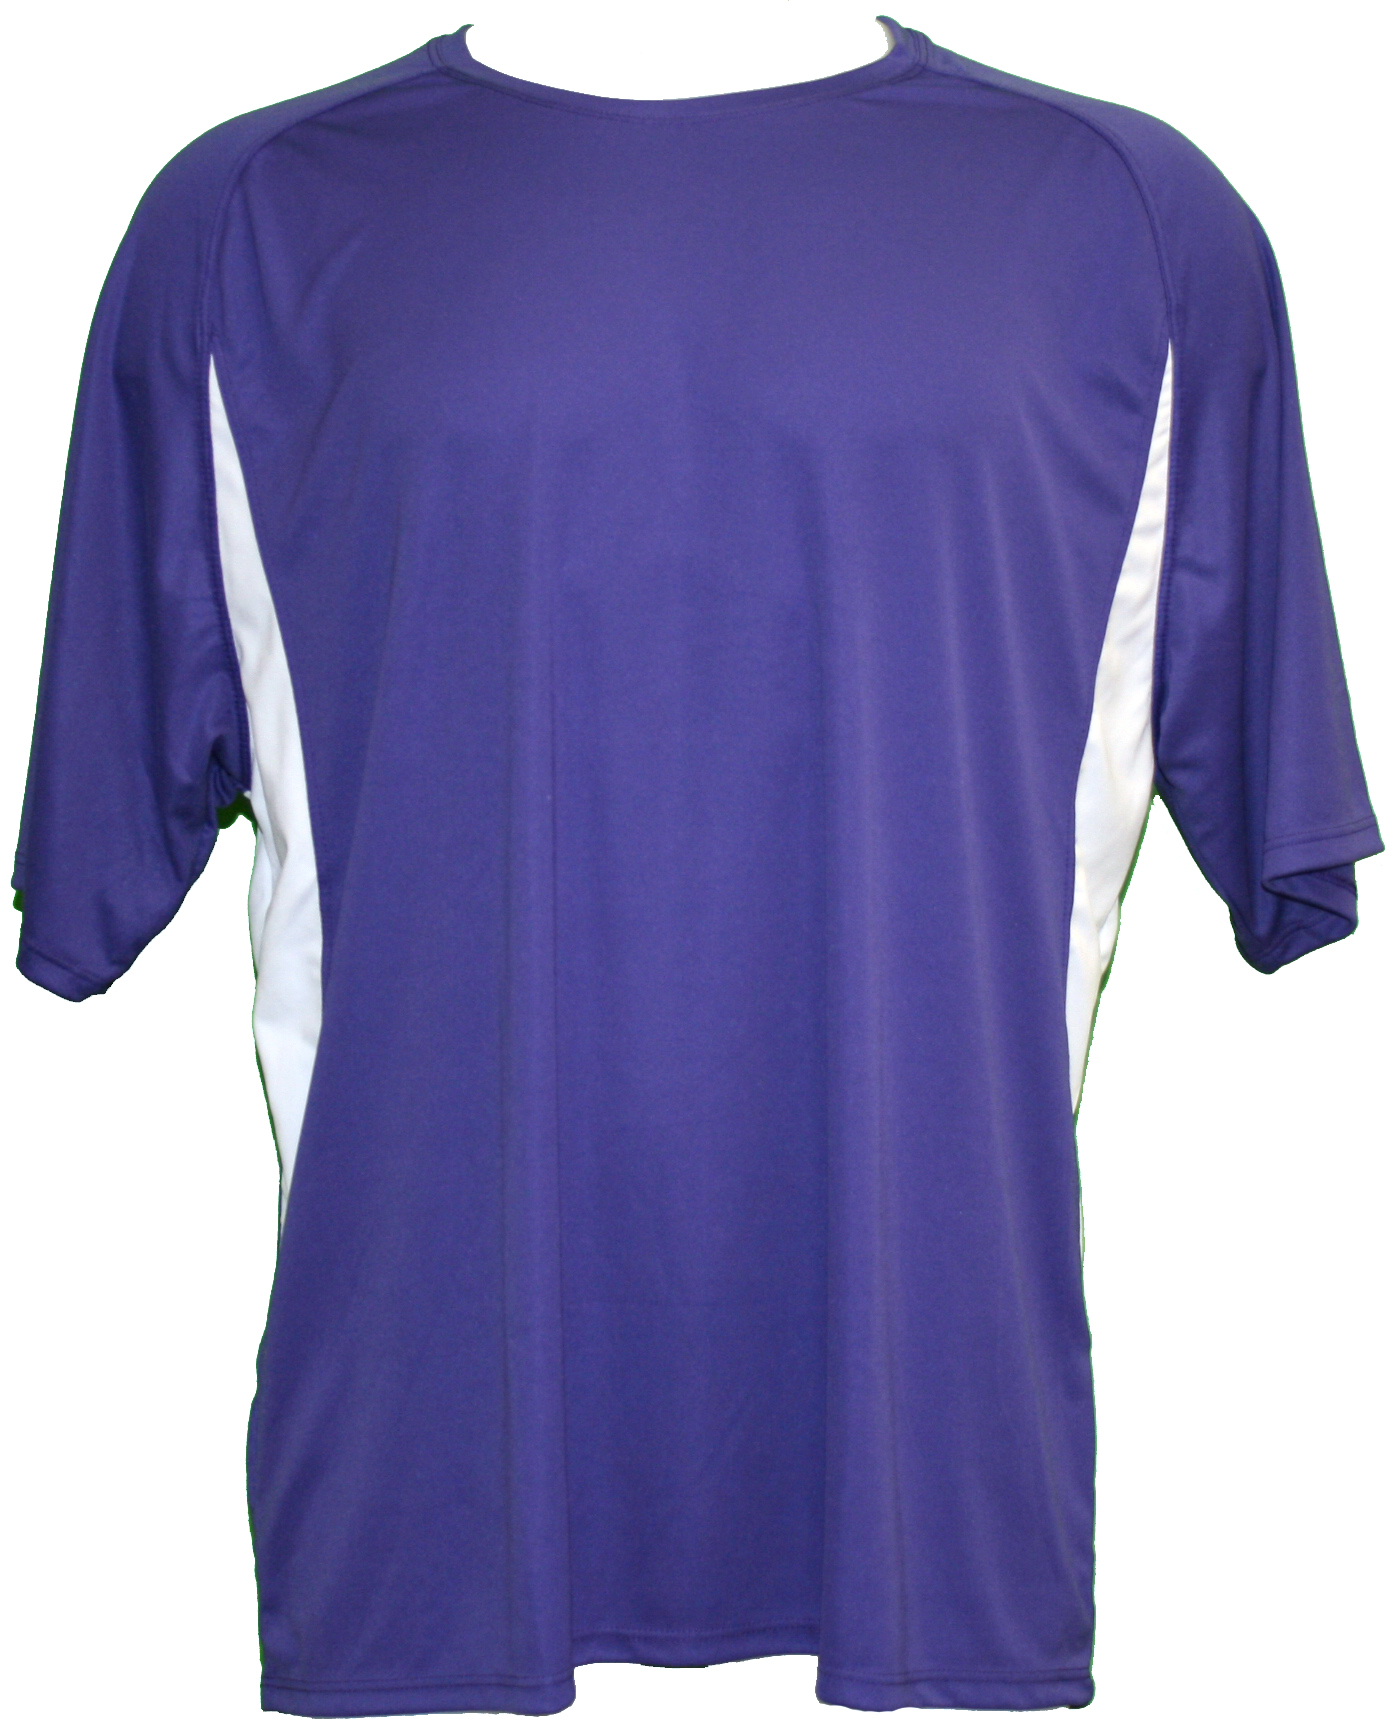 A4 Men&amp;apos;s Performance Color Block Crew Shirt (Purple) CLOSEOUT